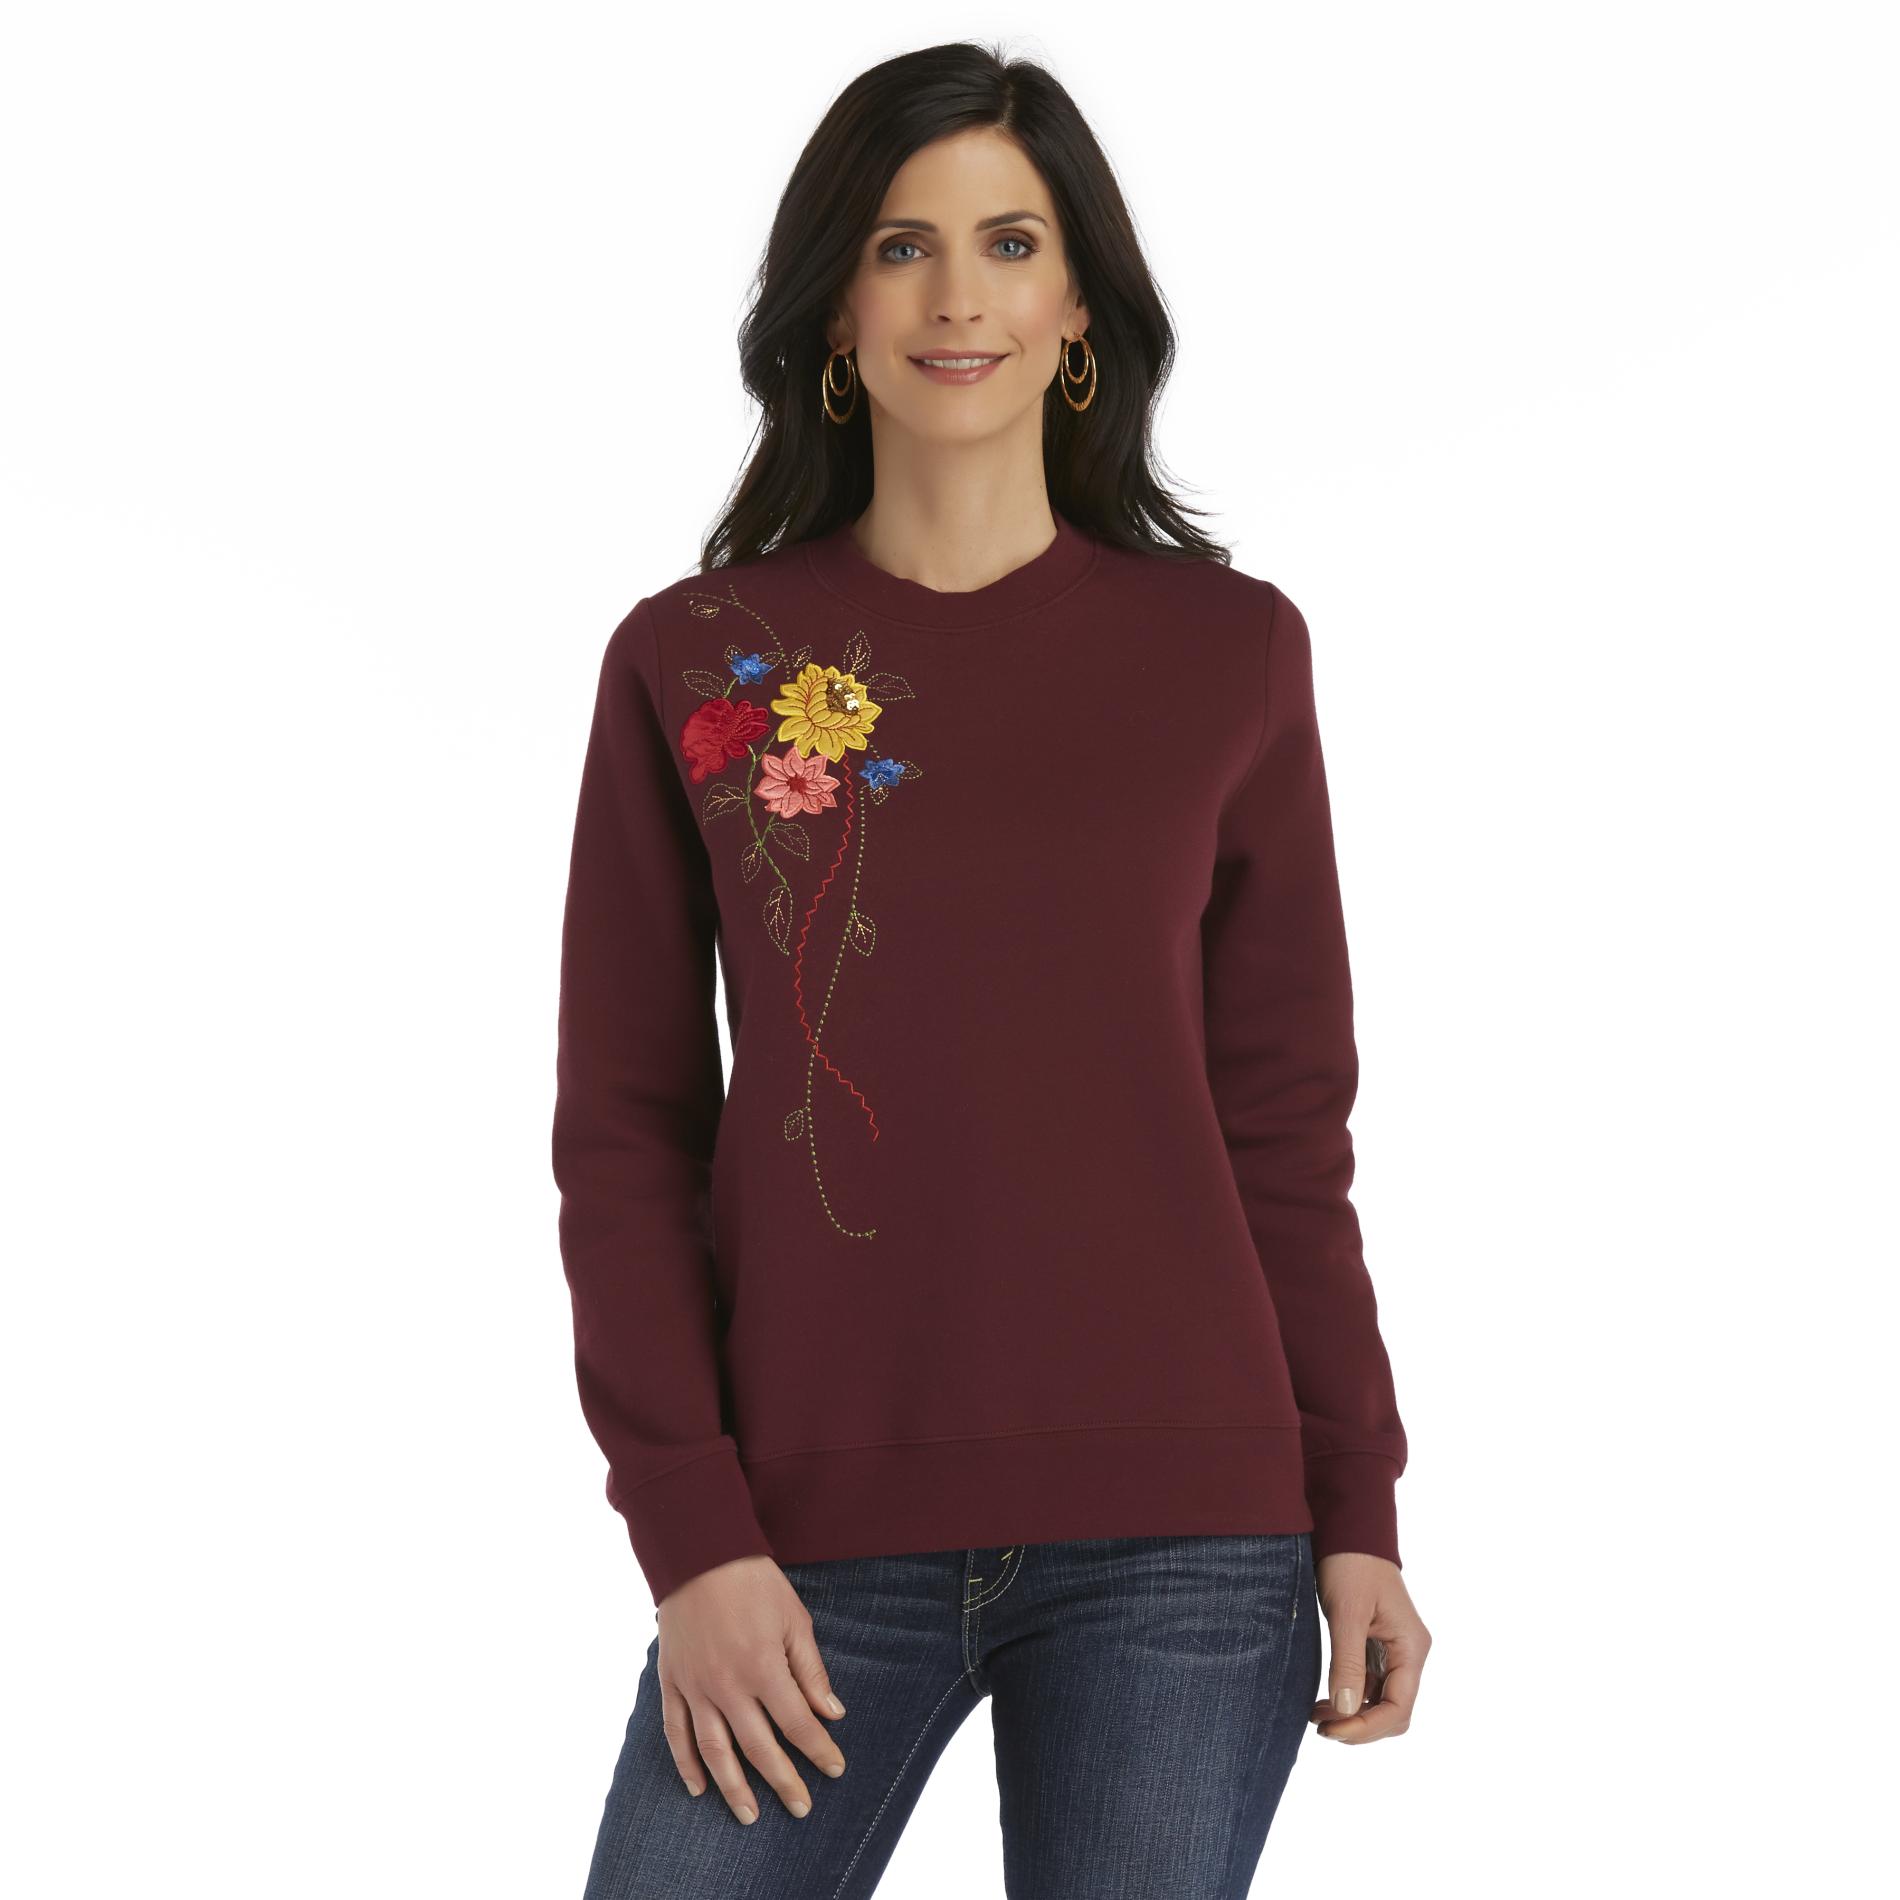 Basic Editions Women's Embellished Sweatshirt - Floral